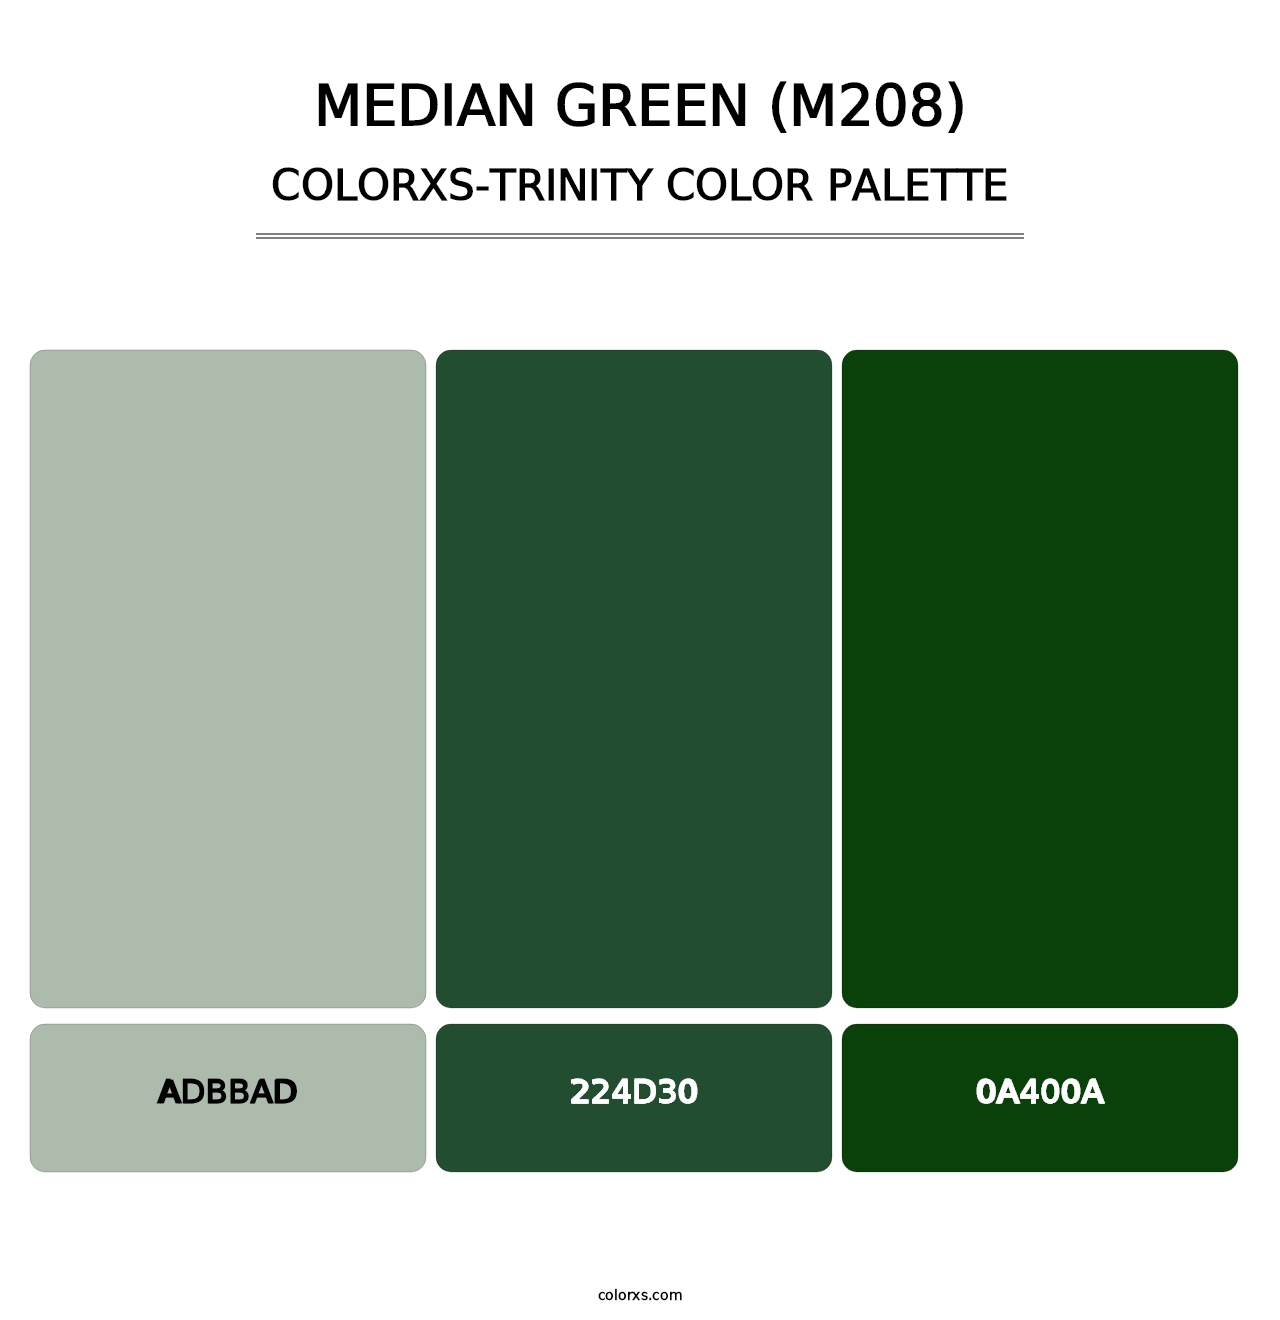 Median Green (M208) - Colorxs Trinity Palette